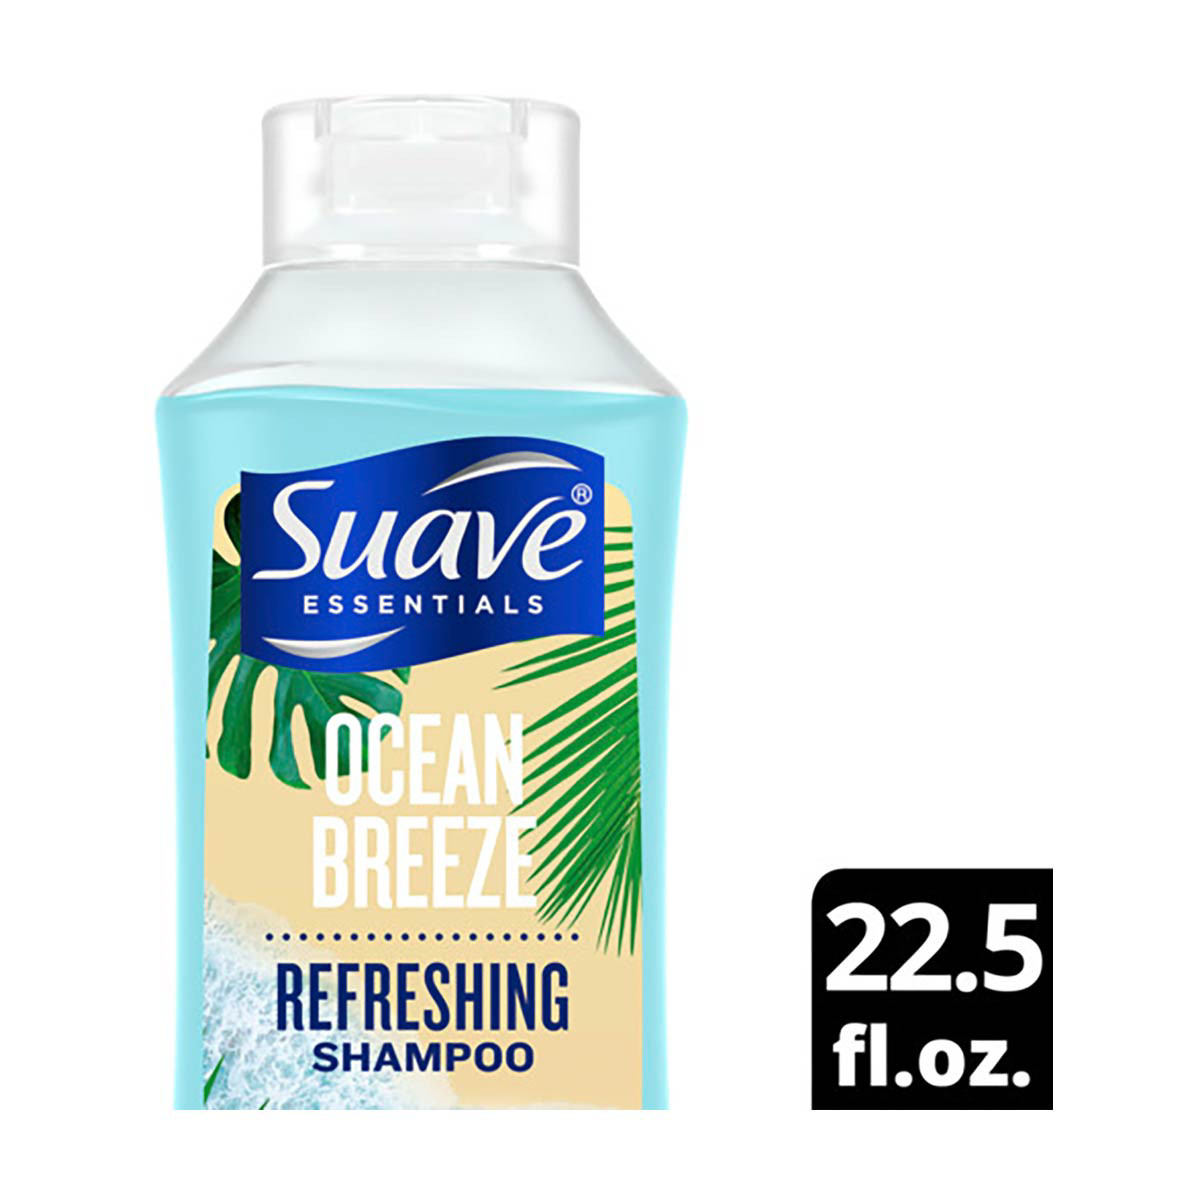 Suave Essentials Ocean Breeze Refreshing Shampoo